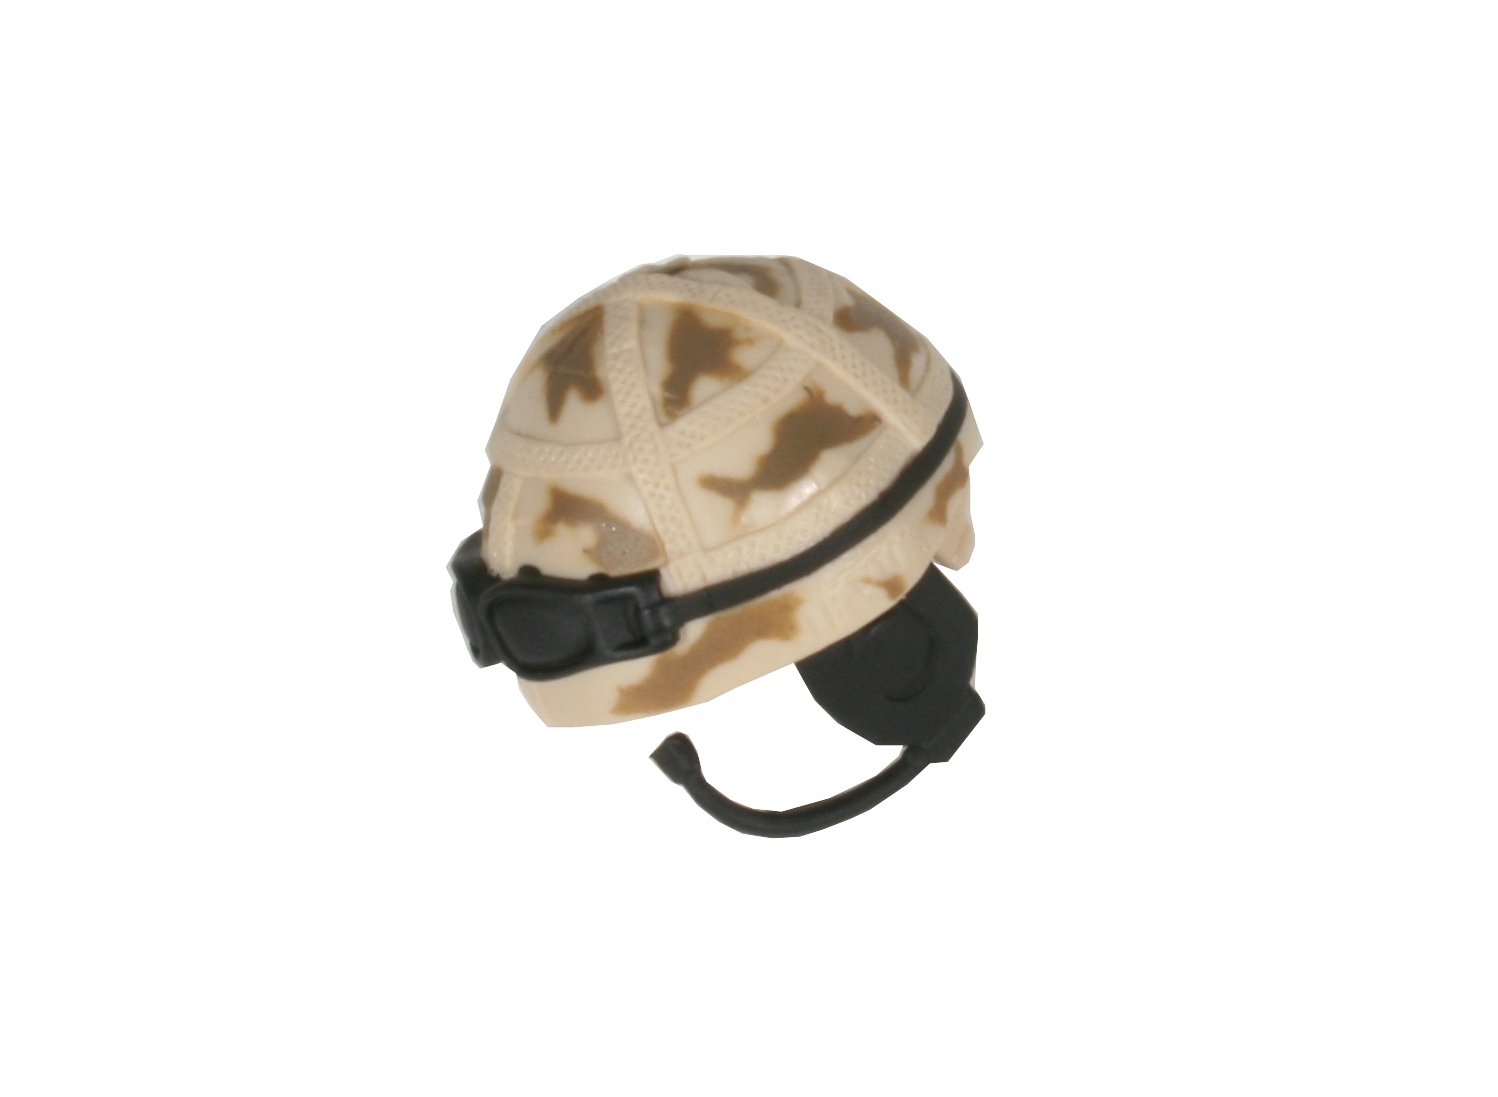 spare Parts - Hmaf Regiment Gunner - Helmet